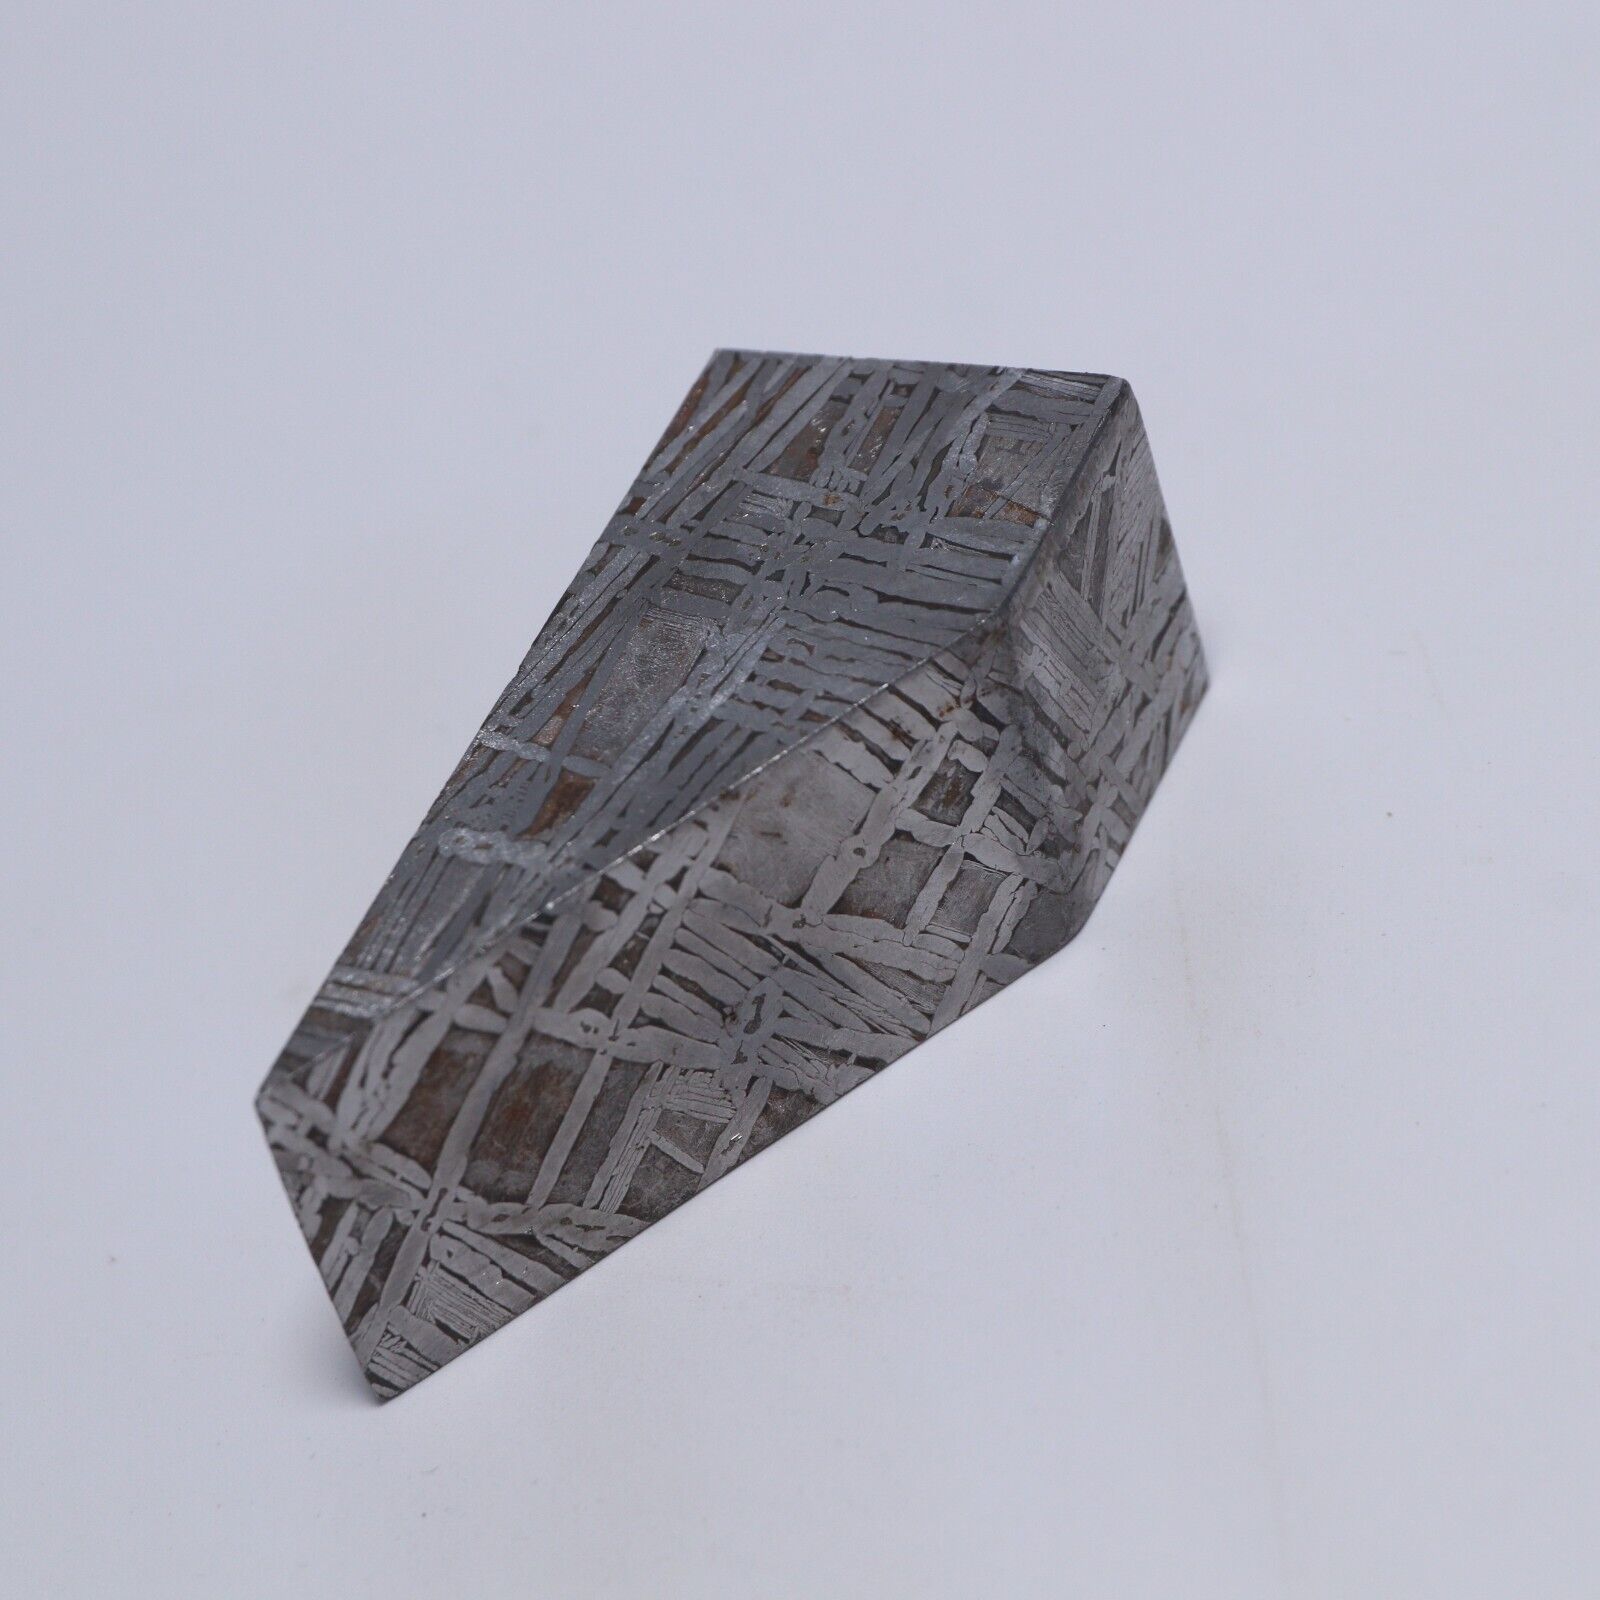 112g Muonionalusta Meteorite,Natural meteorite slice,Space rock,collection B2872